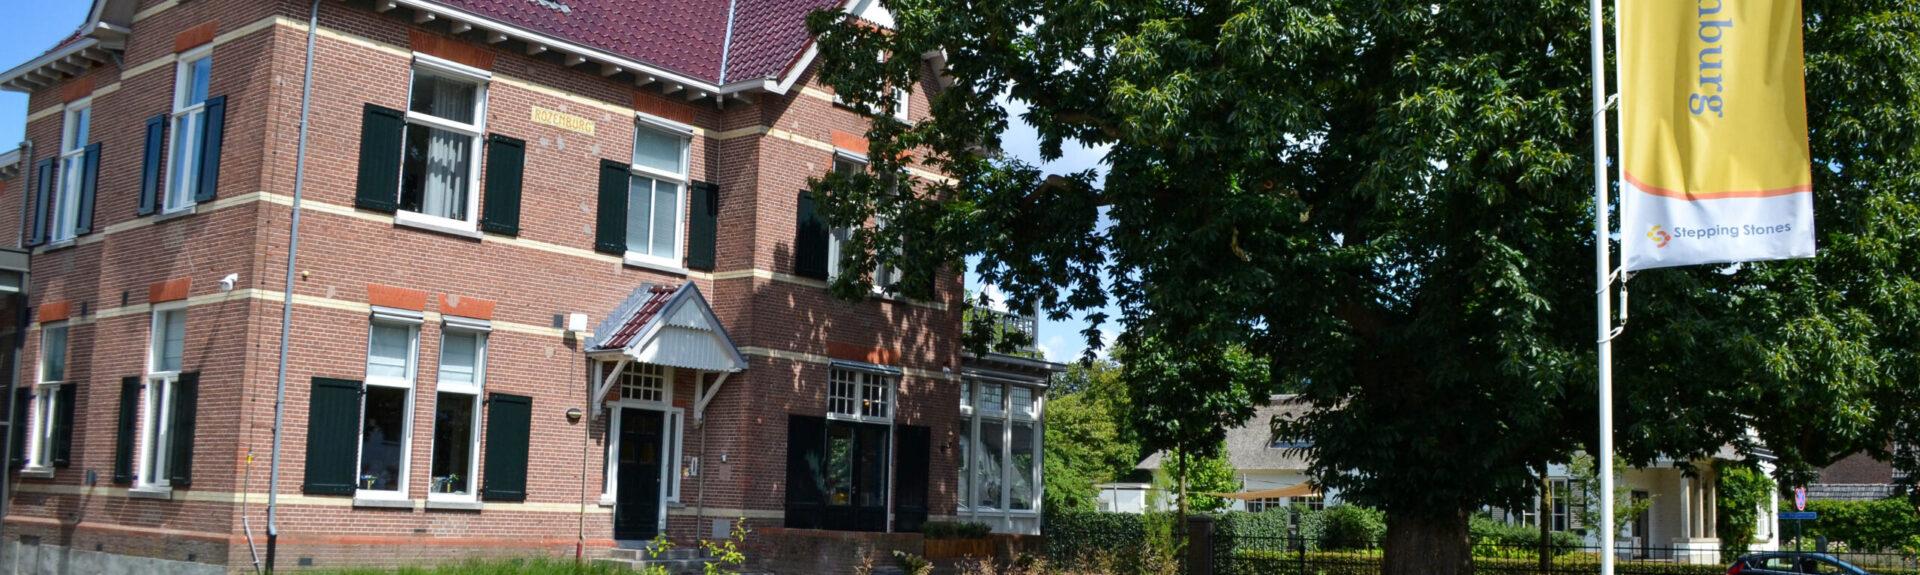 Villa Rozenburg schijndel (4)